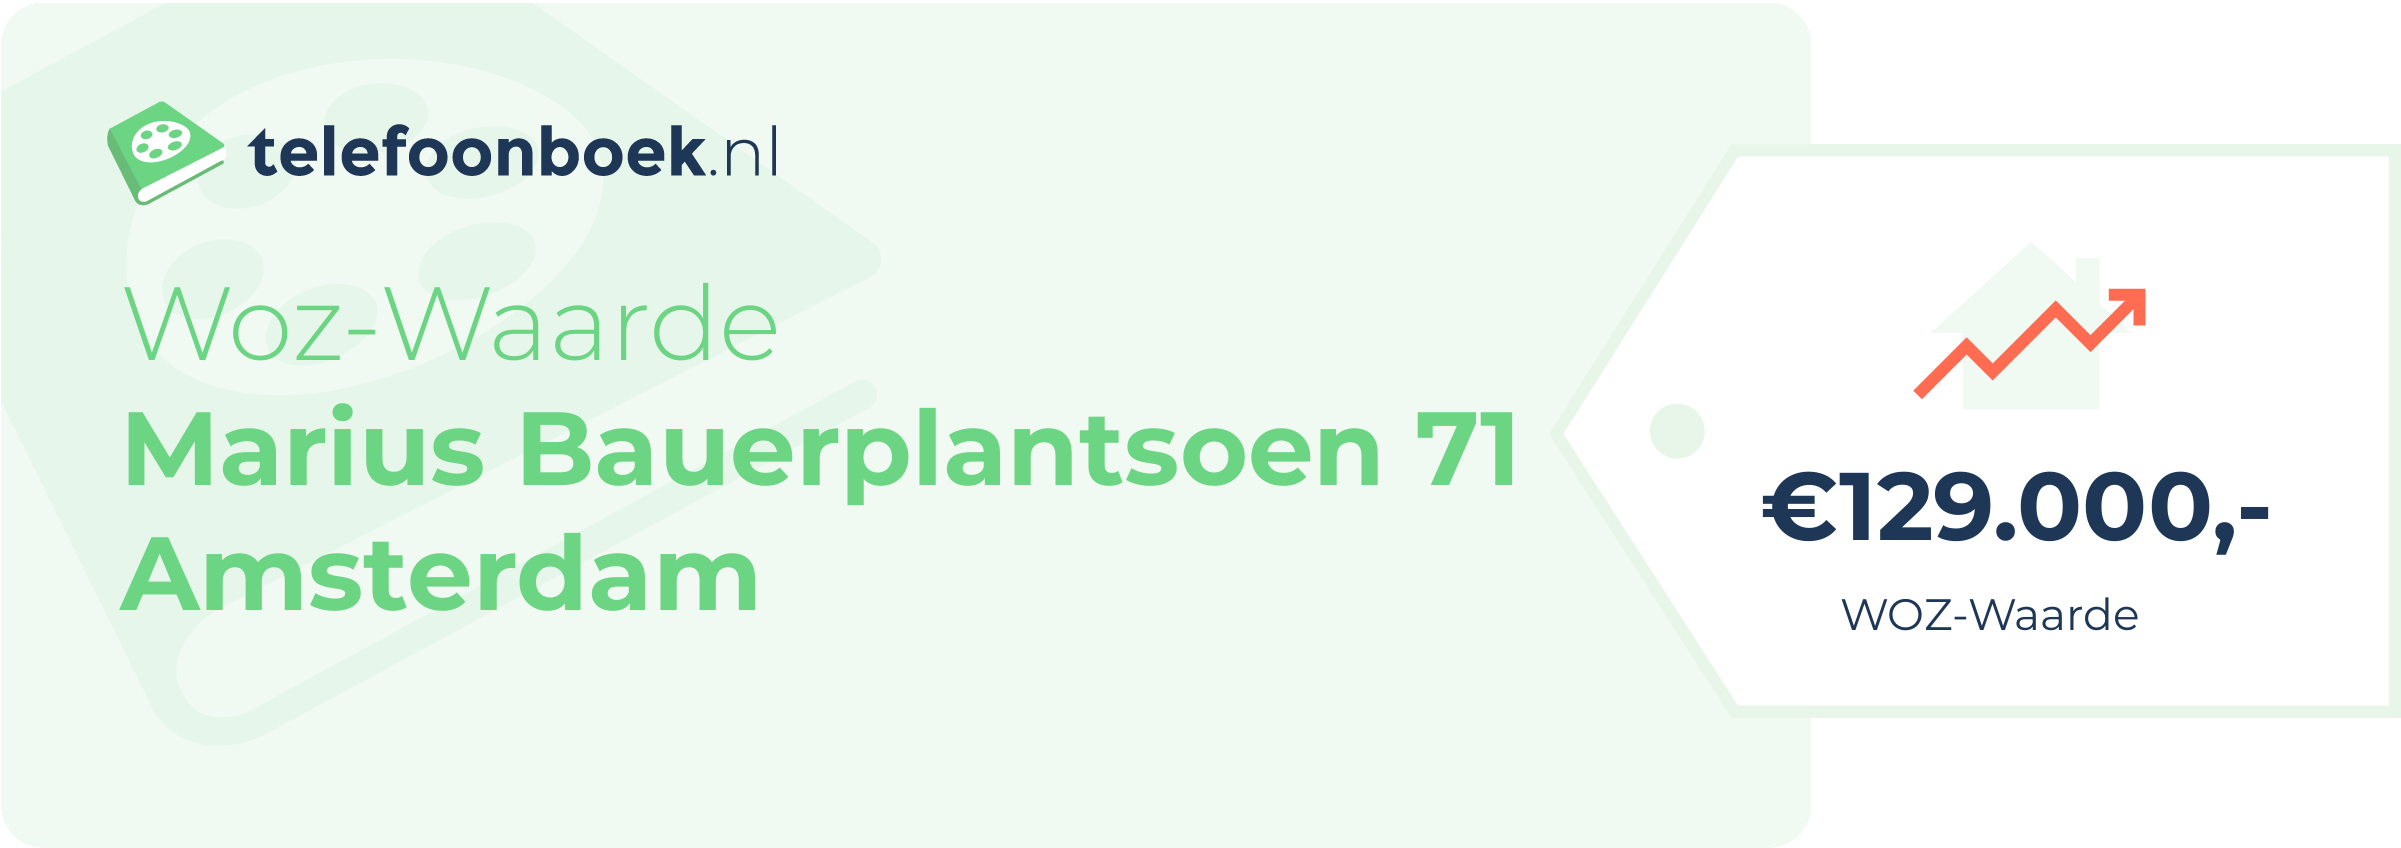 WOZ-waarde Marius Bauerplantsoen 71 Amsterdam